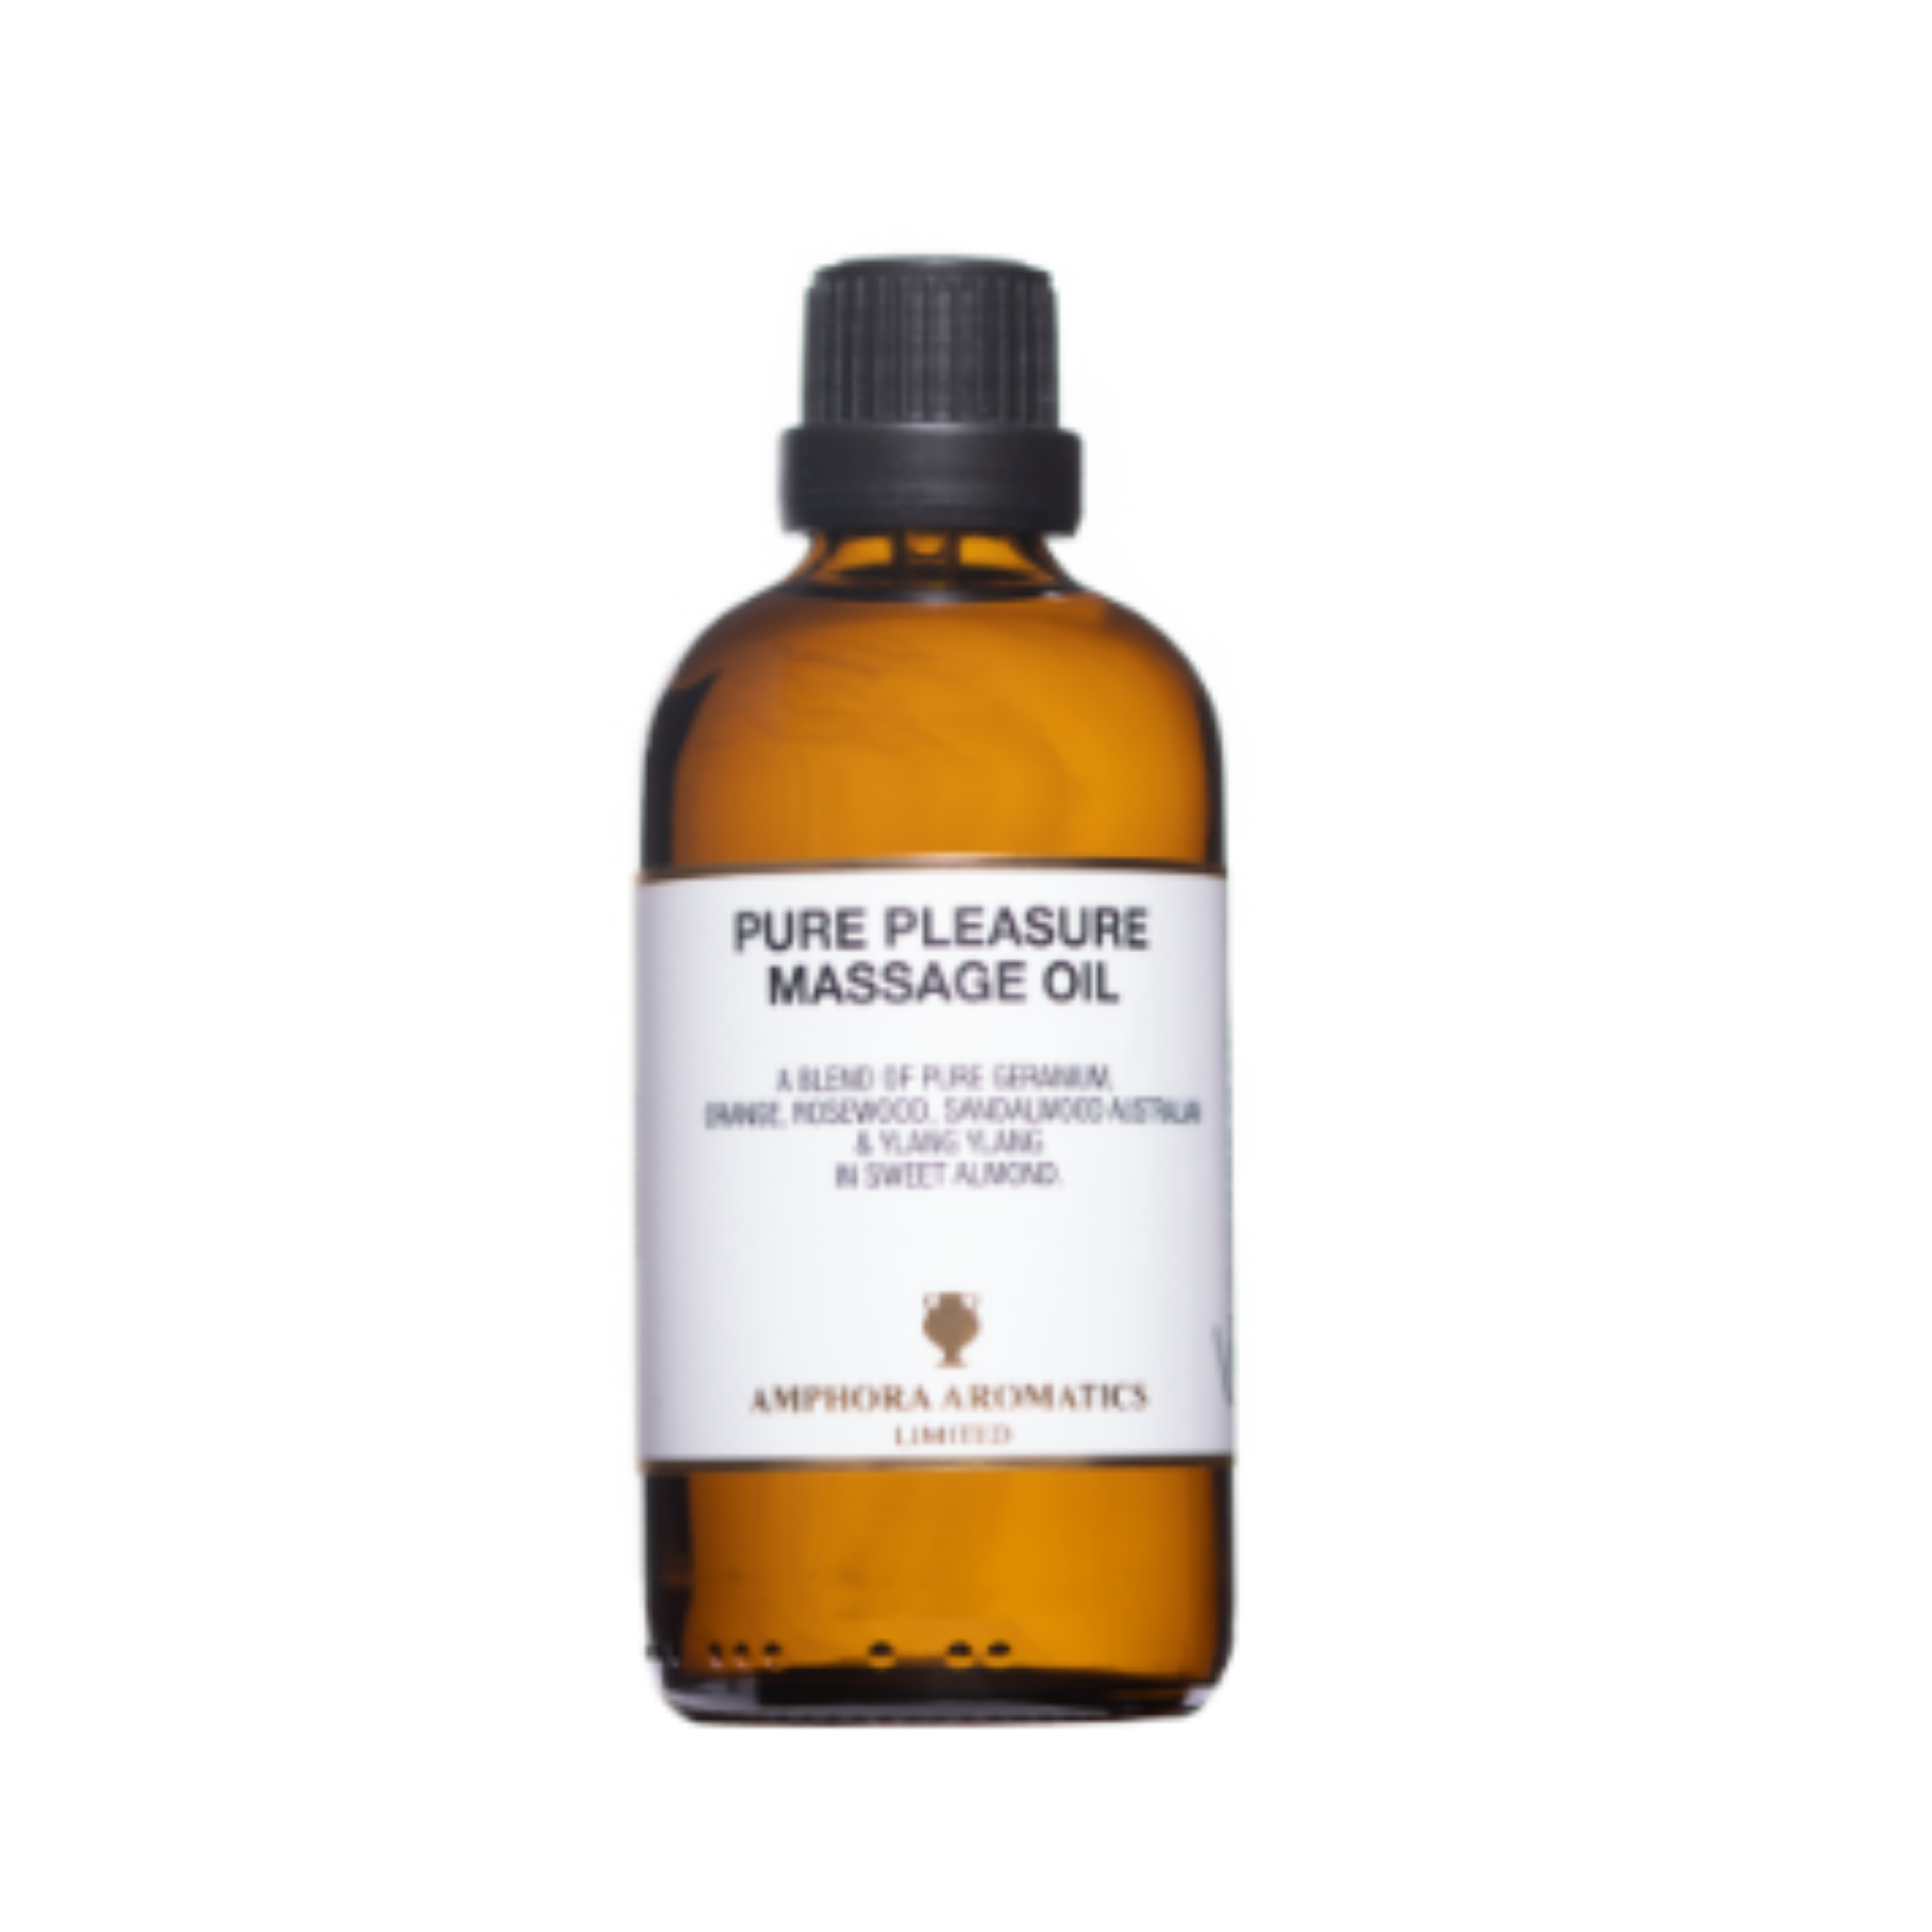 Pure Pleasure Massage Oil by Amphora Aromatics